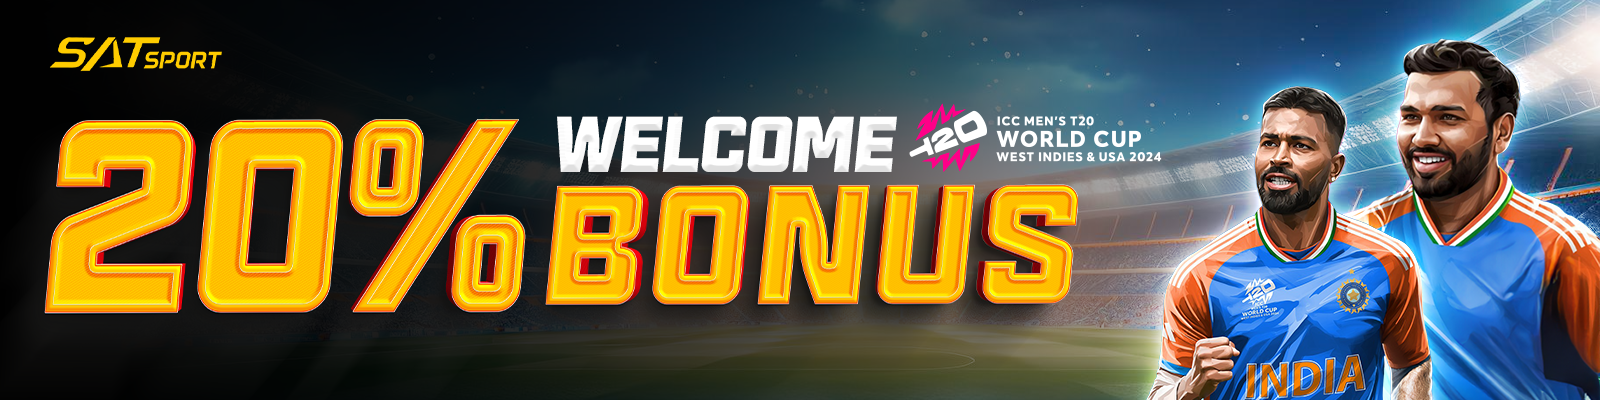 Satsport | Get 20% Bonus on new Cricket Betting ID